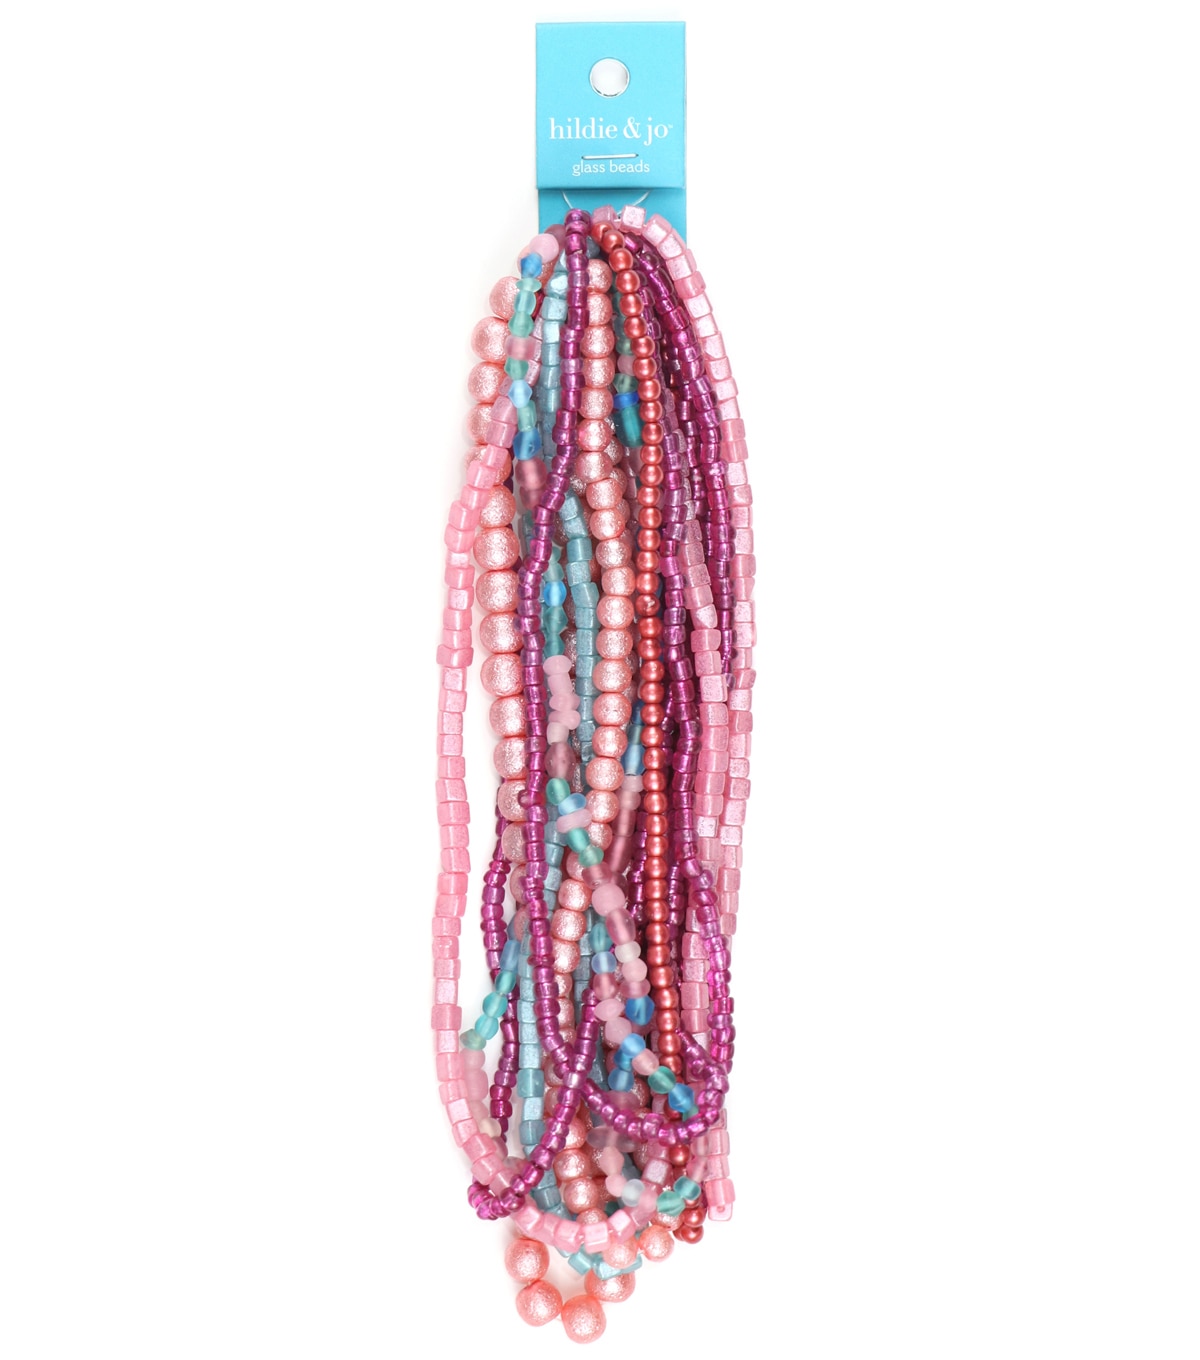 beaded boho multi strands seed beads love beads bracelet 12pc set